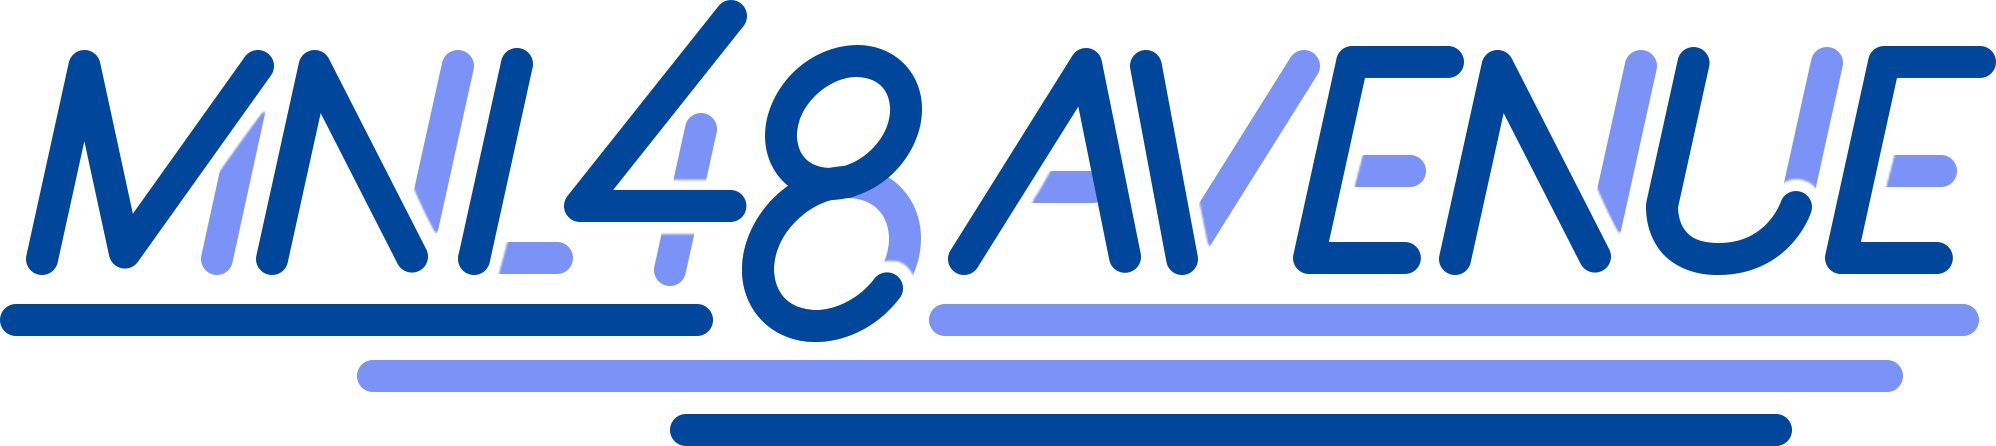 MNL48_logo